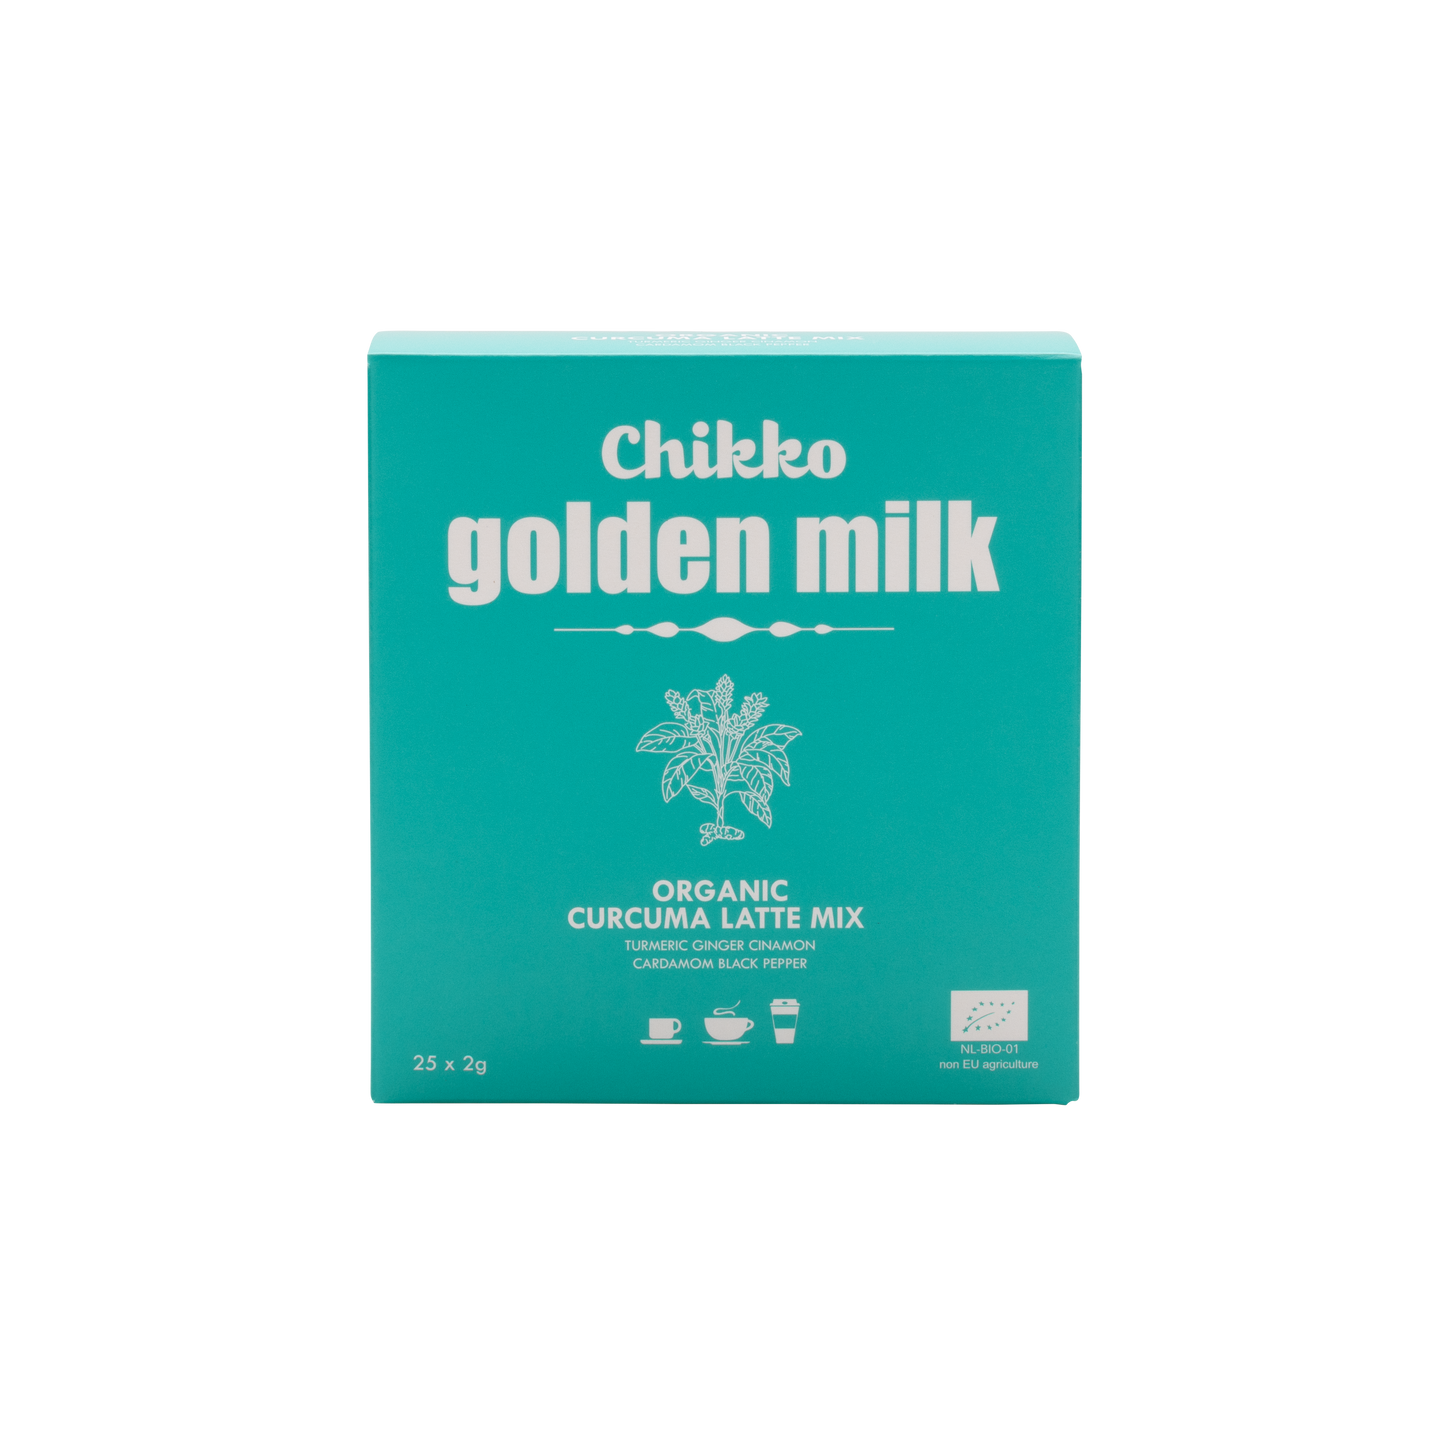 Chikko Golden Milk - Take away sachets